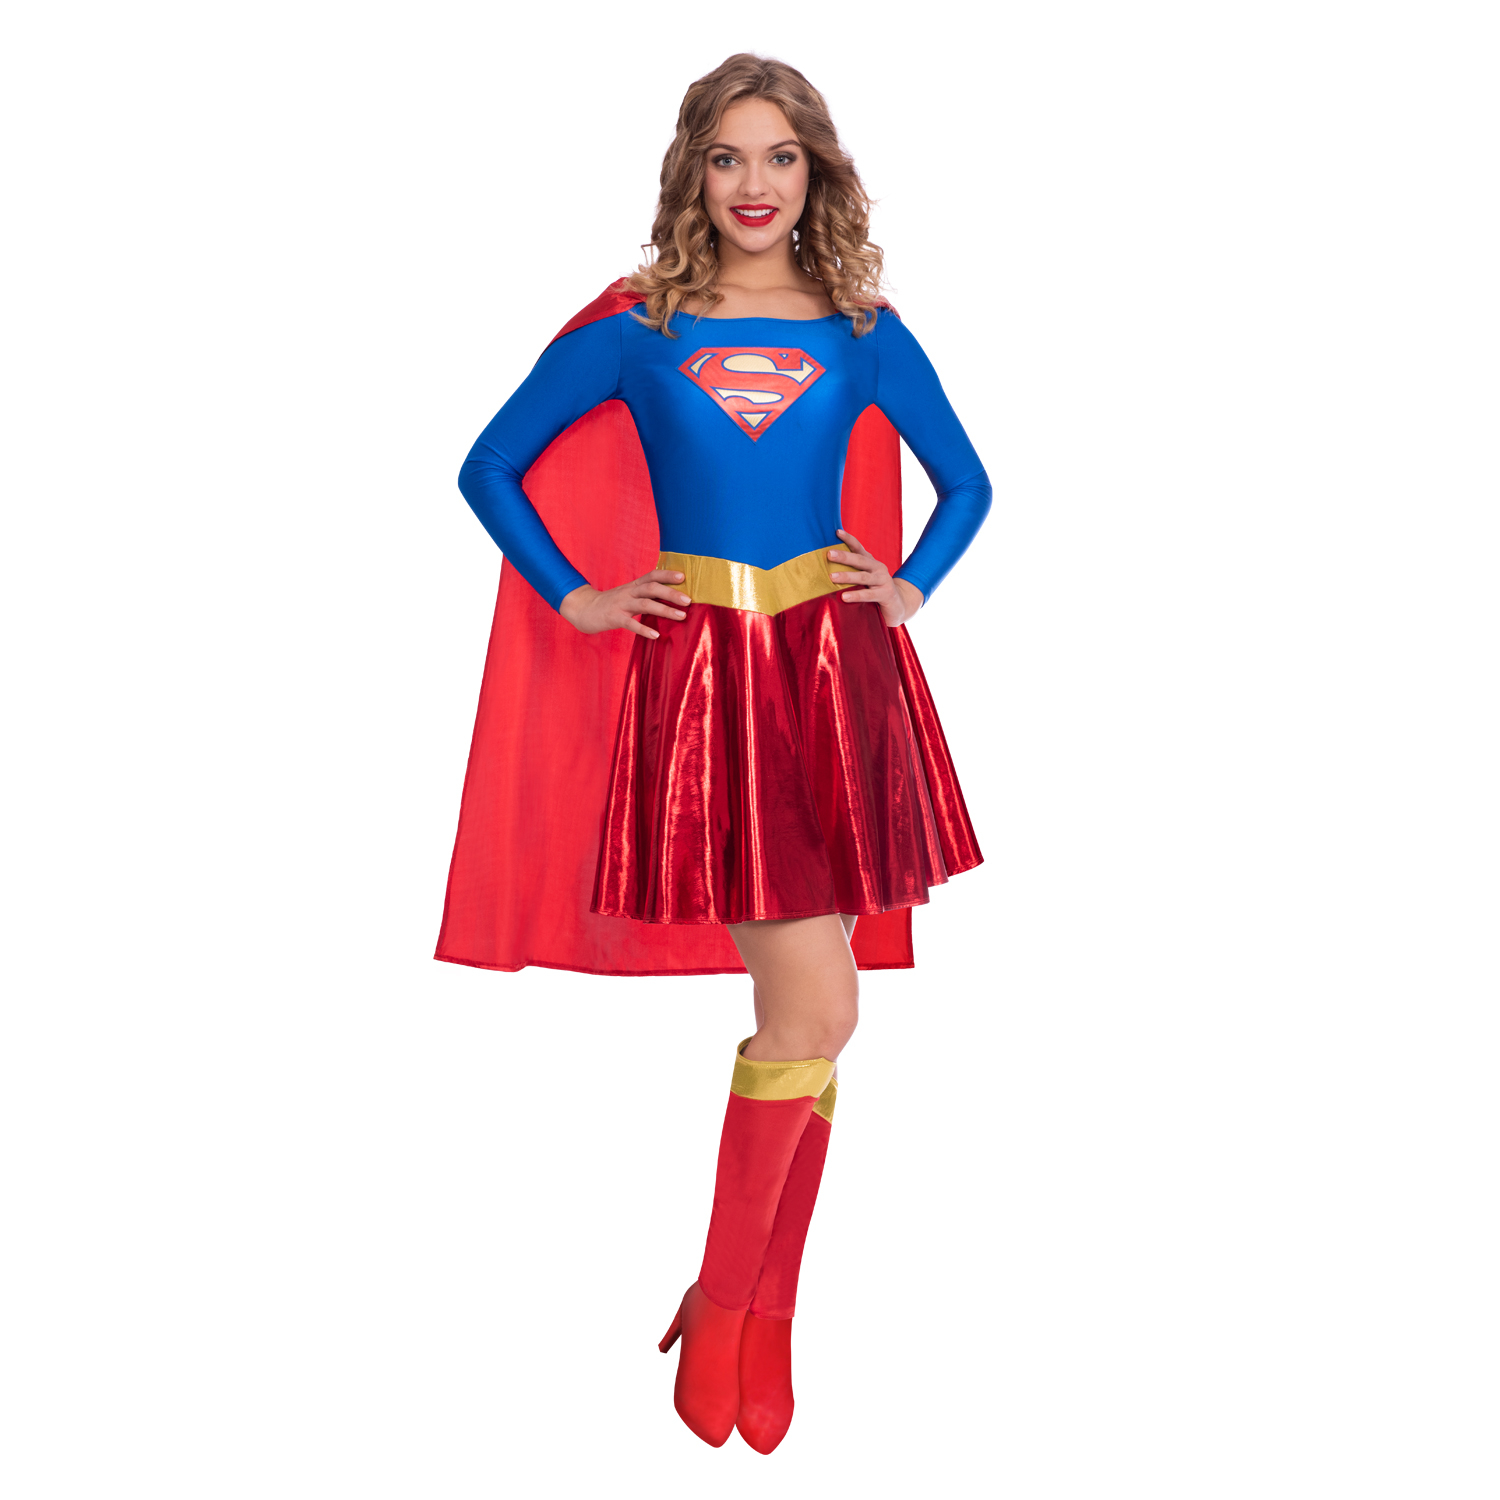 Supergirl Classic Costume - Size 10-12 - 1 PC : Amscan International